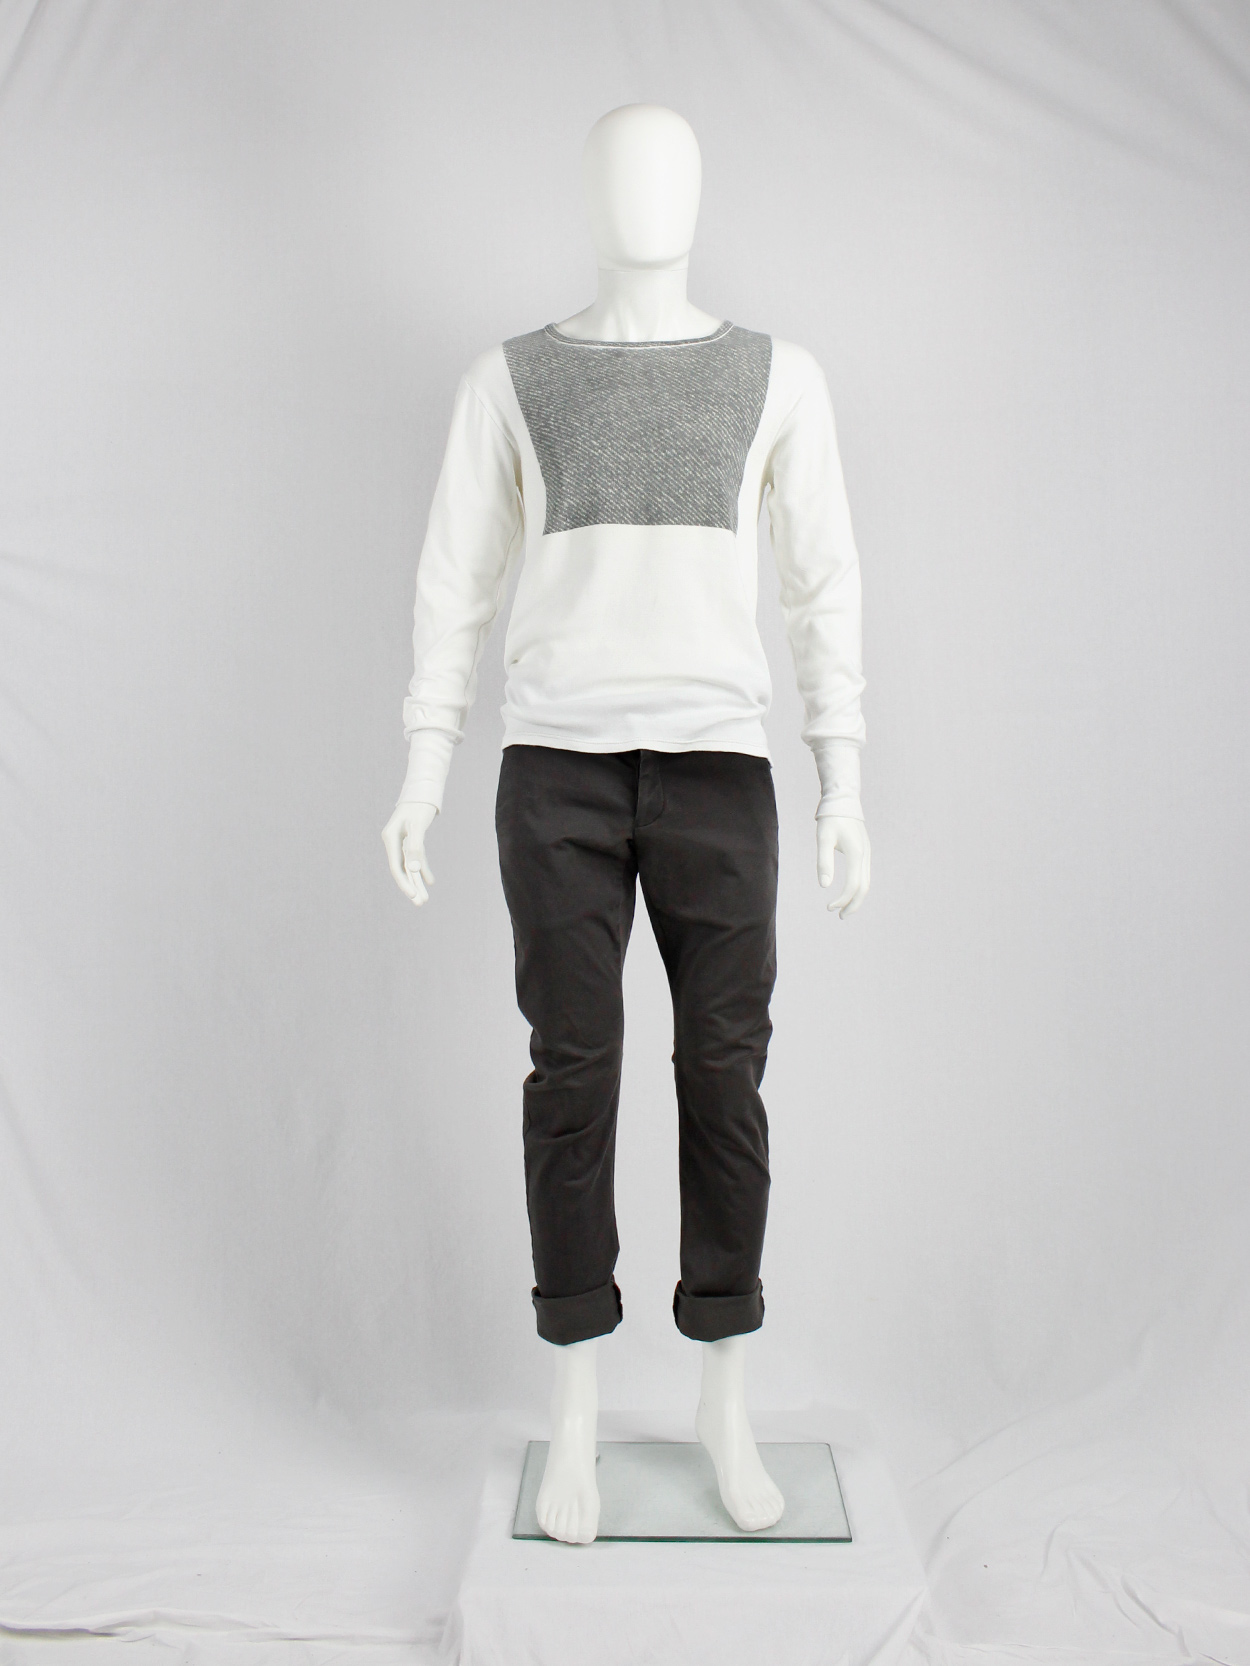 Maison Martin Margiela artisanal jumper with printed grey texture (7)